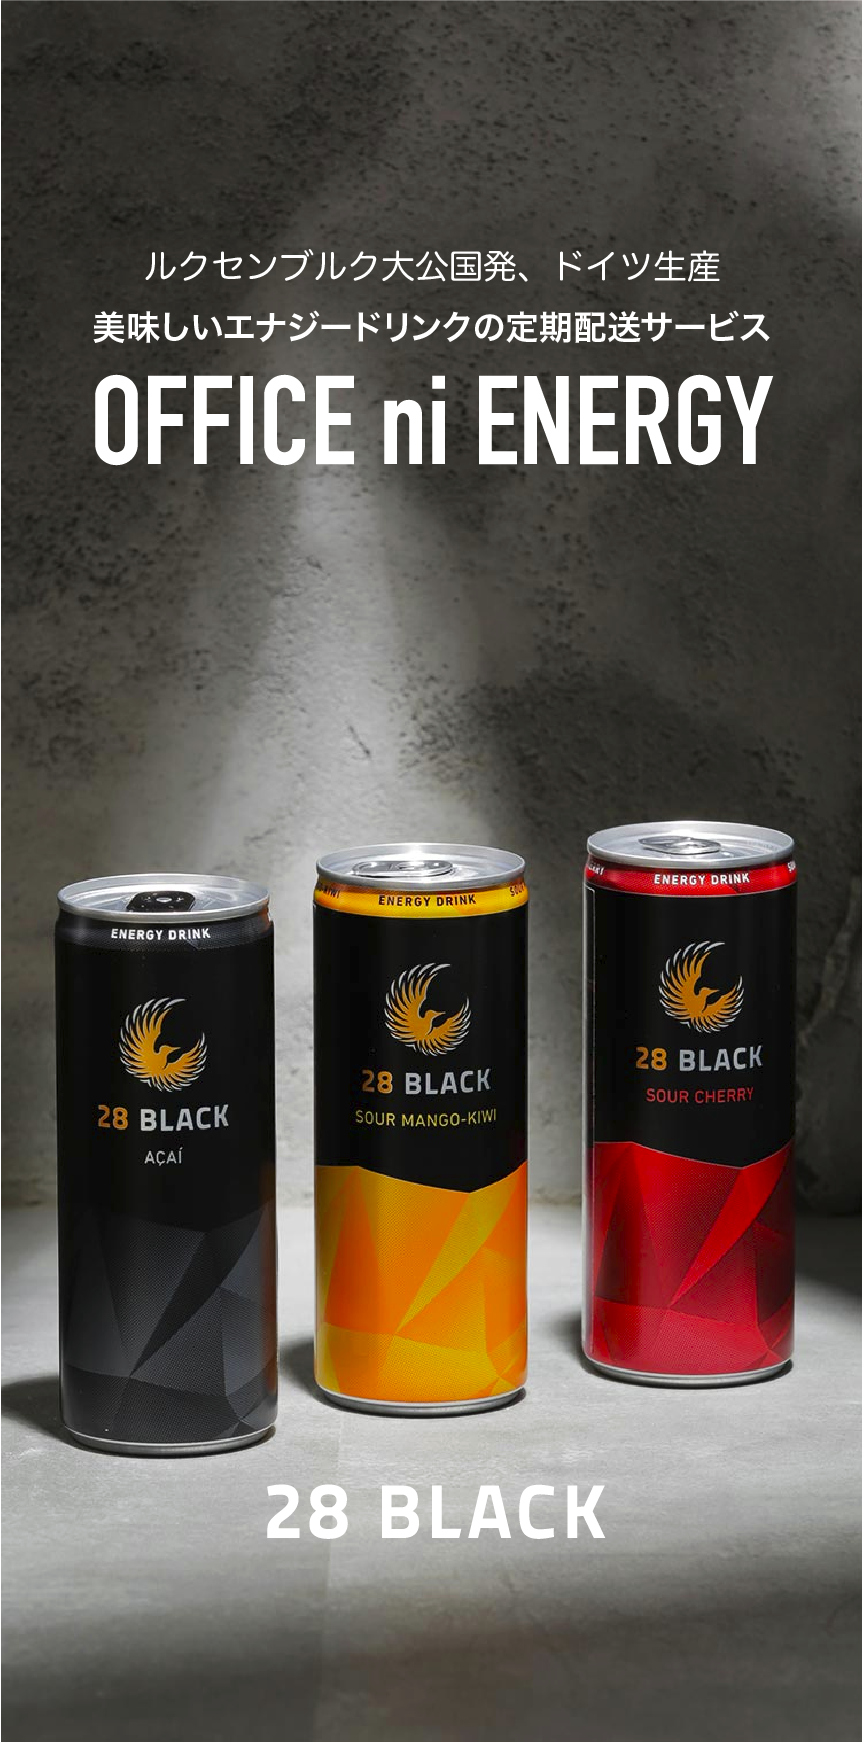 OFFICE ni ENERGY by 28 BLACK